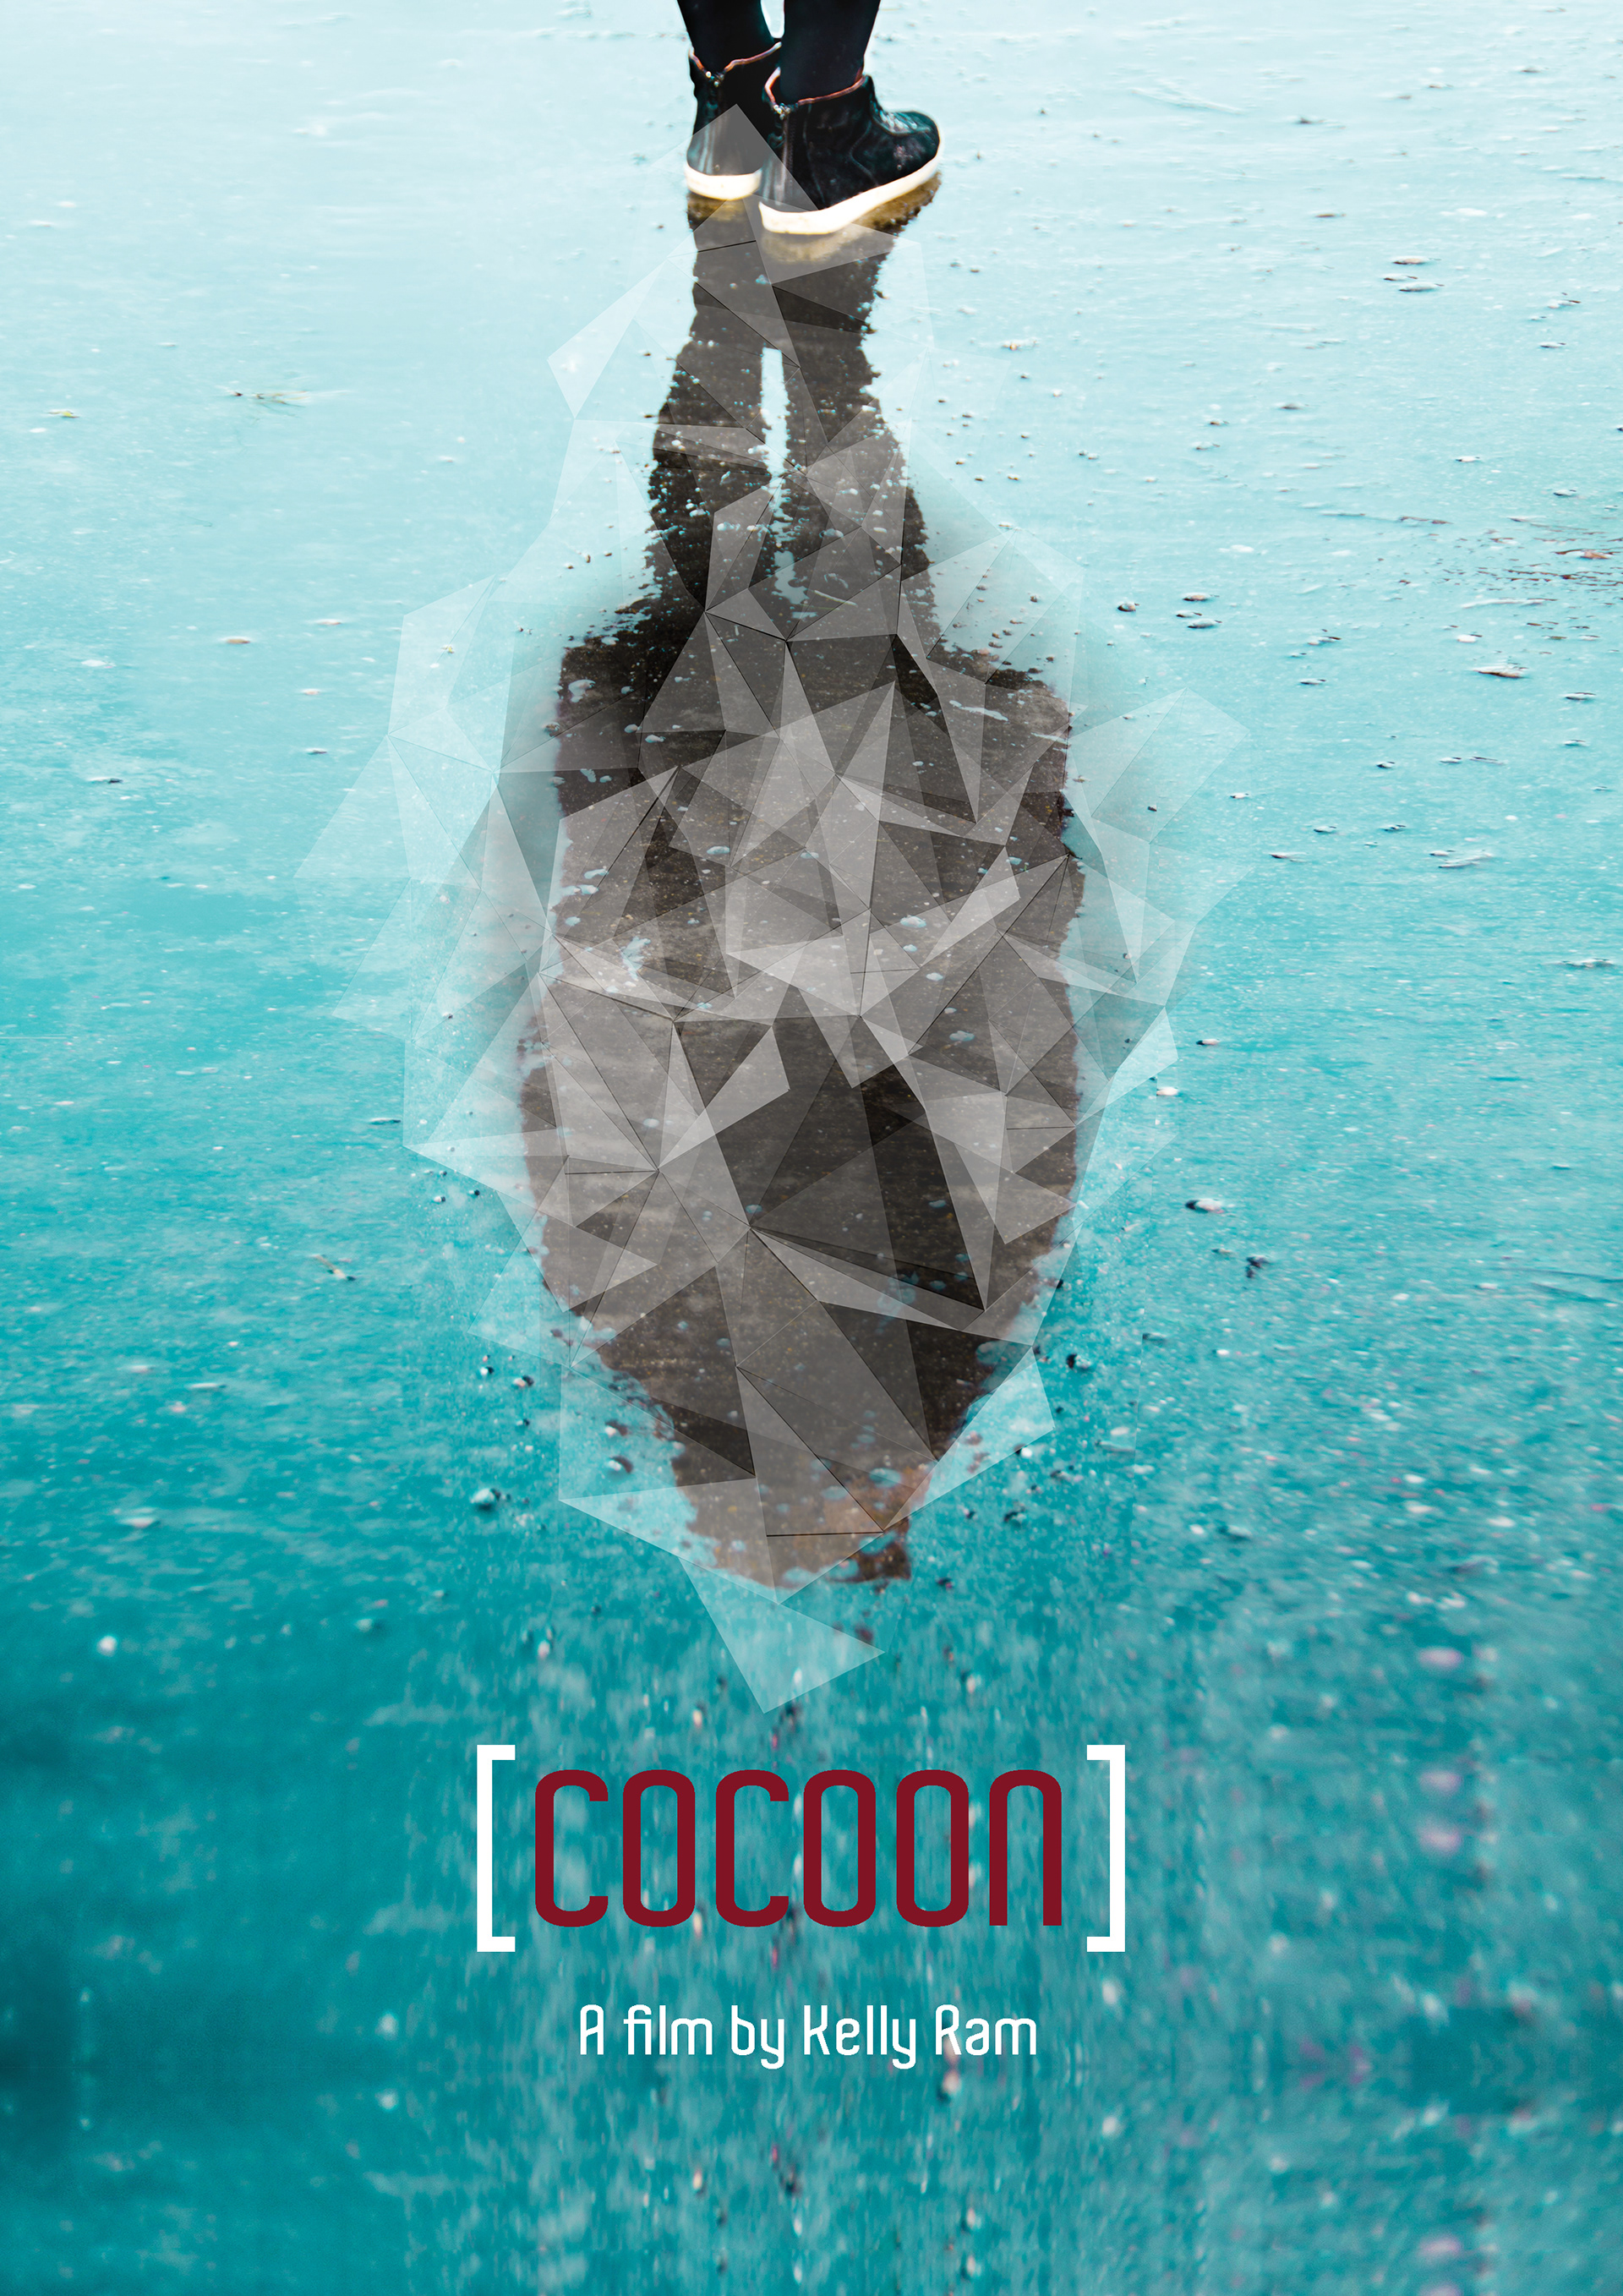 download cocoon films